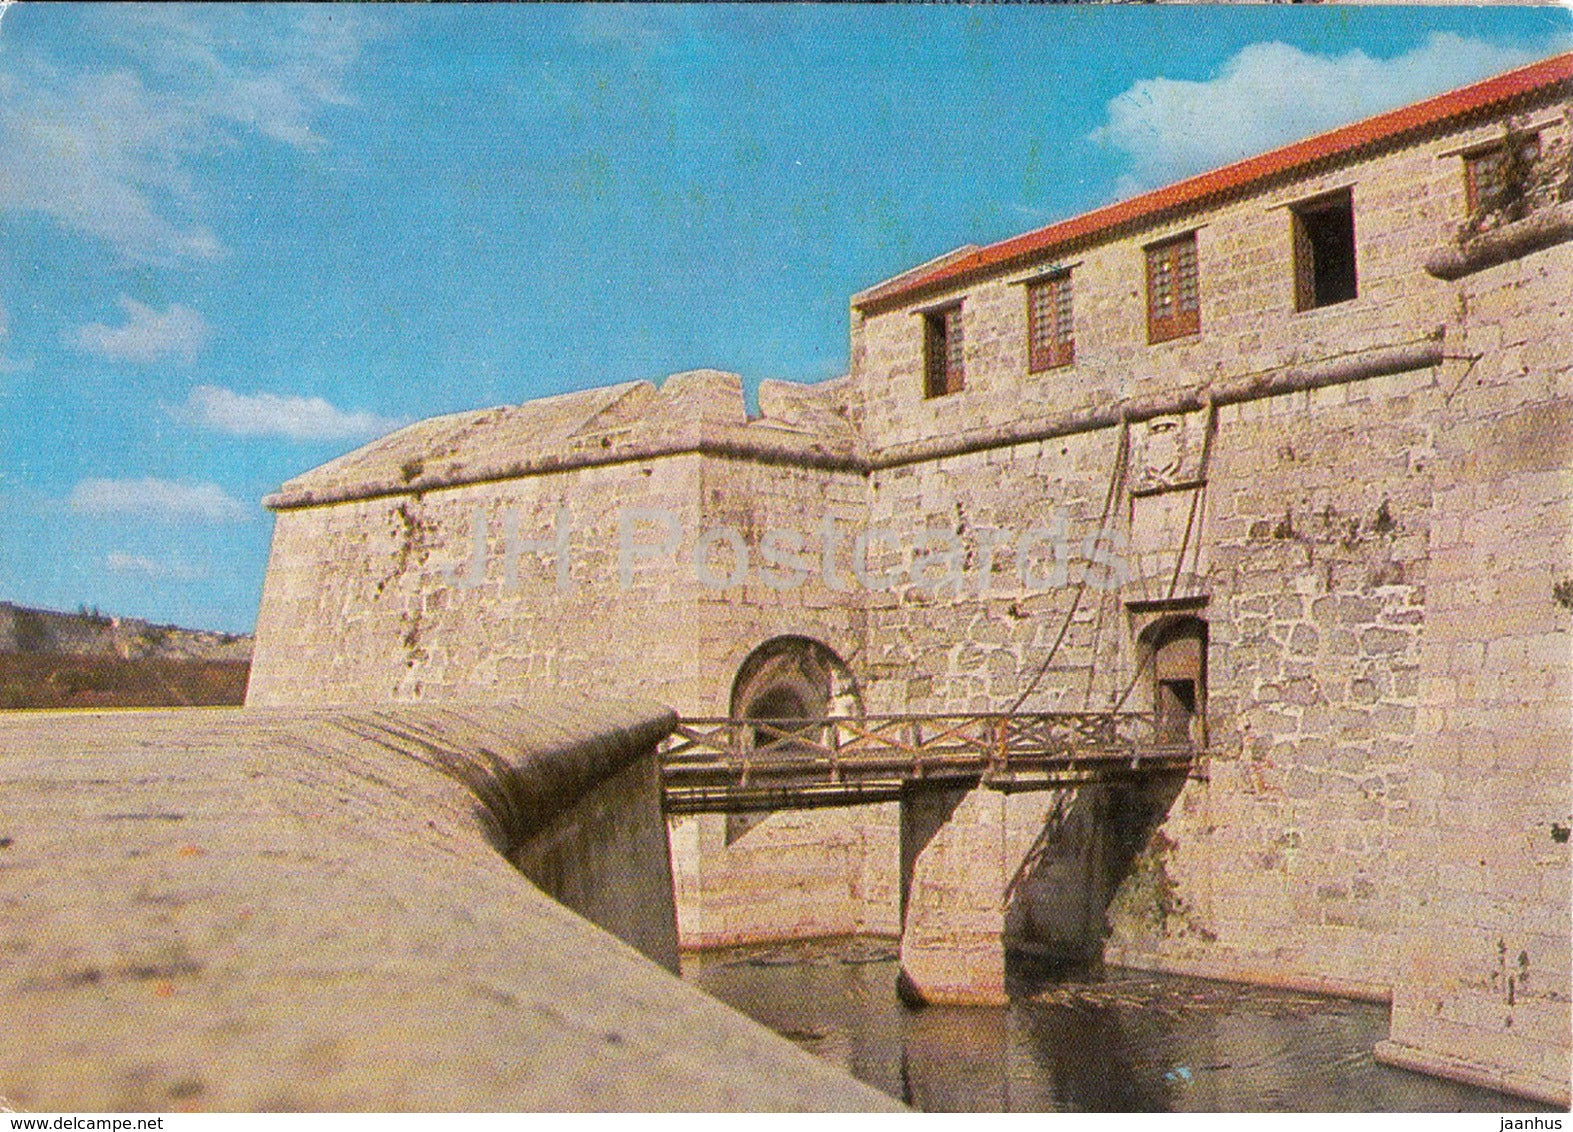 Habana - Castillo de la Fuerza - castle - Cuba - unused - JH Postcards